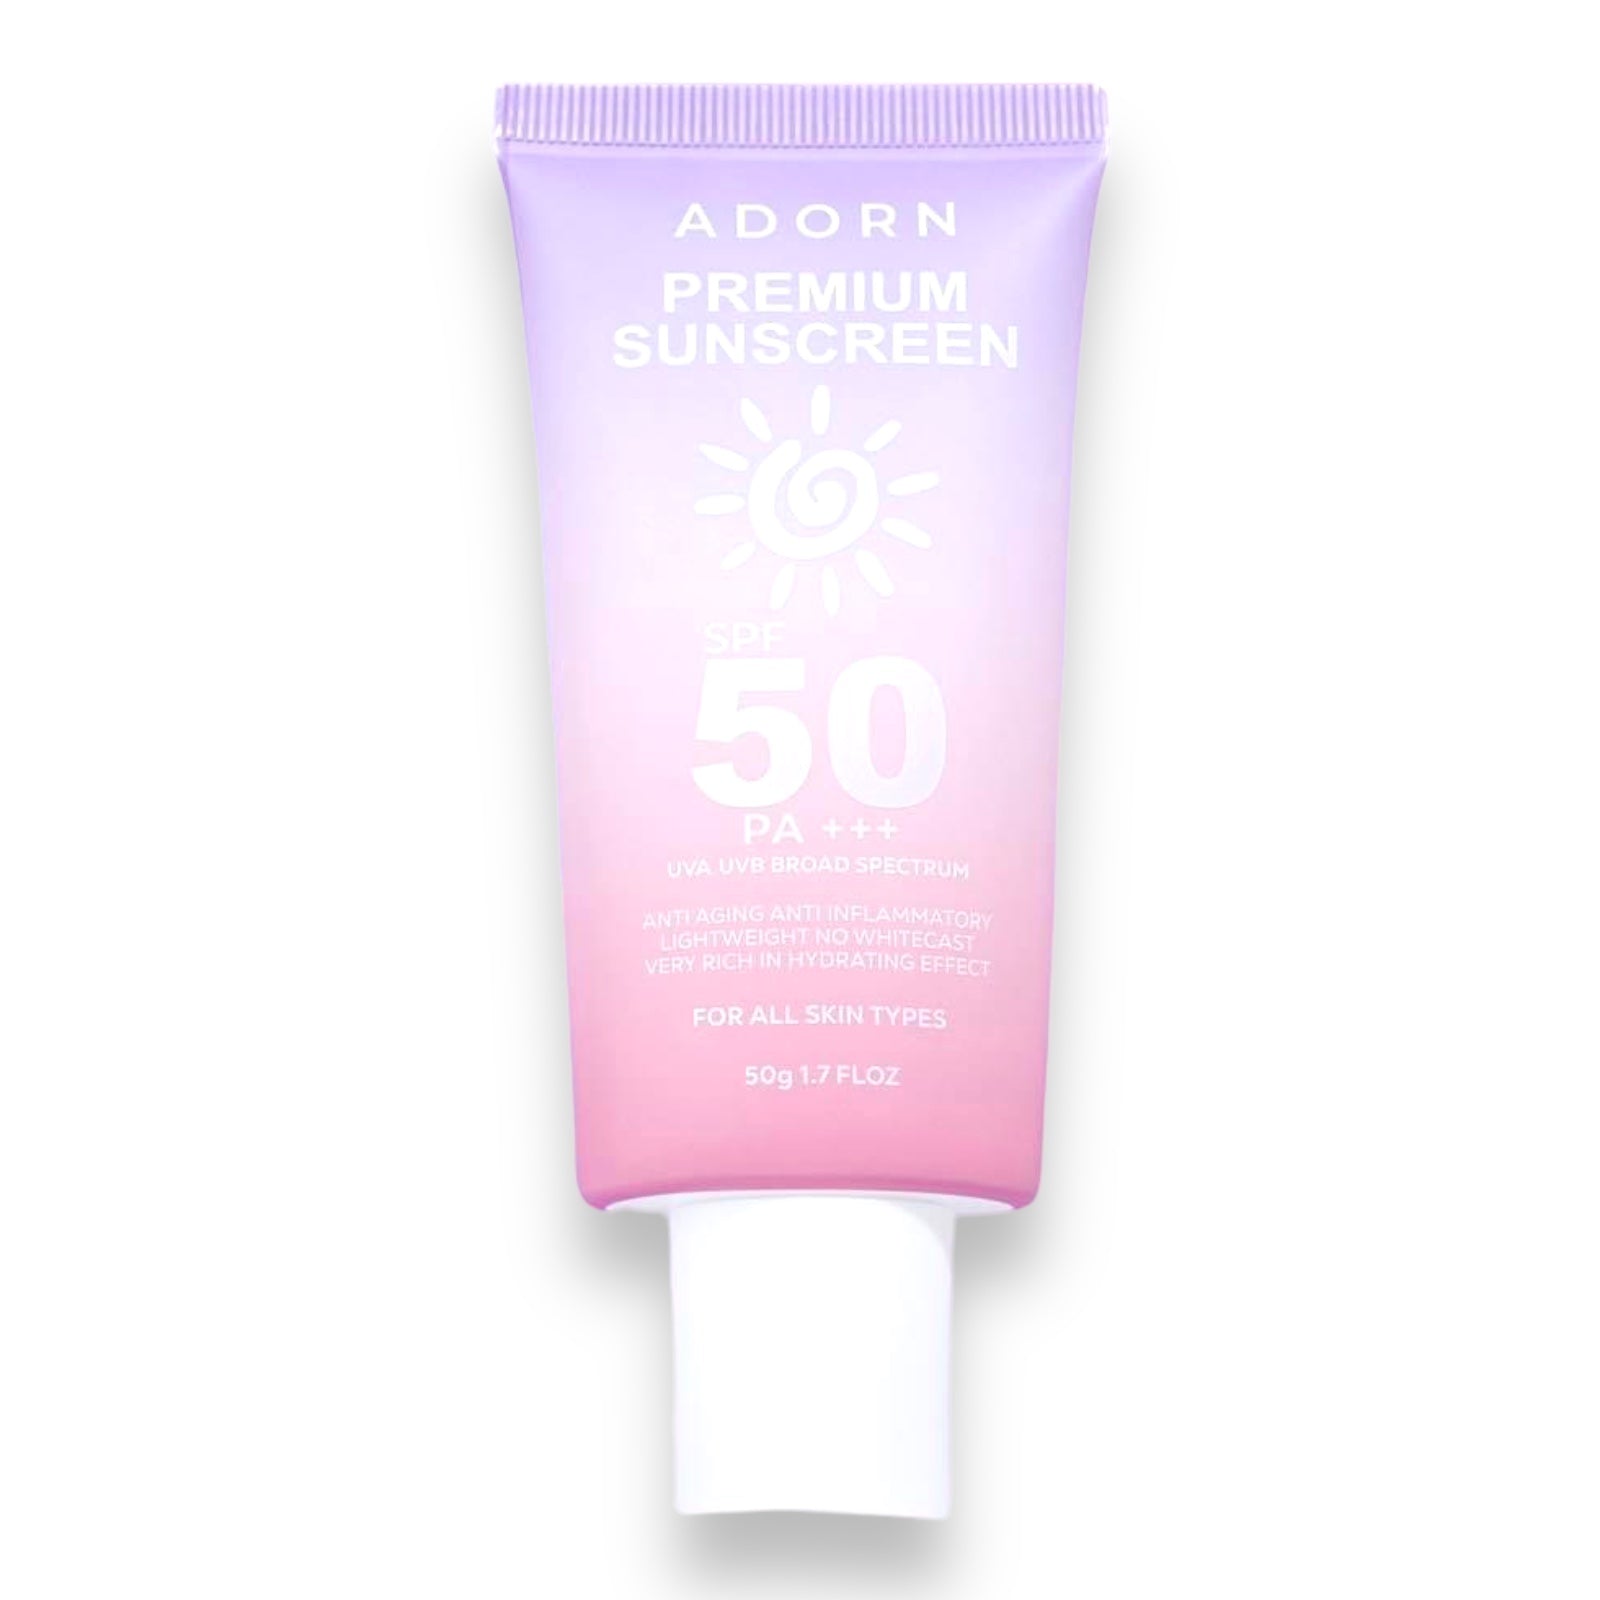 ADORN - Premium Sunscreen SPF 50 - 50g